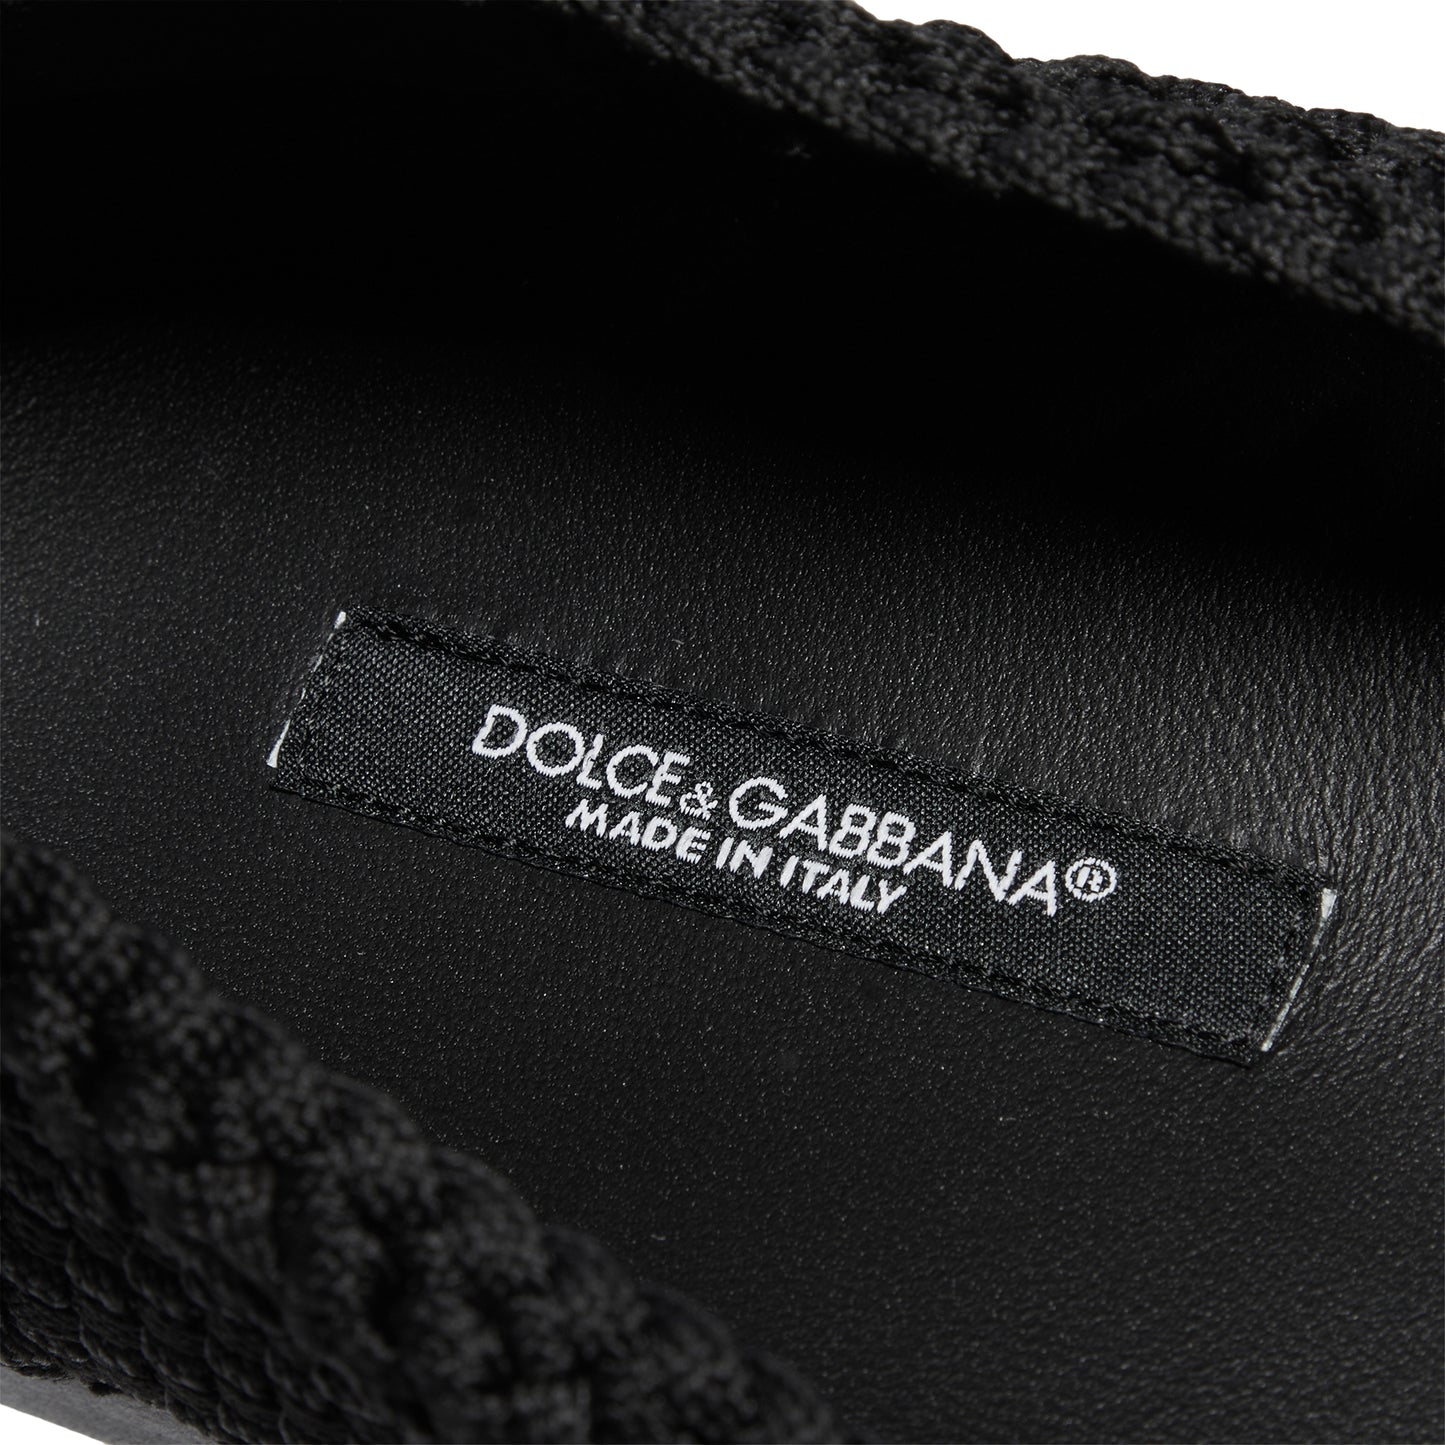 Dolce & Gabbana Slippers (Black)